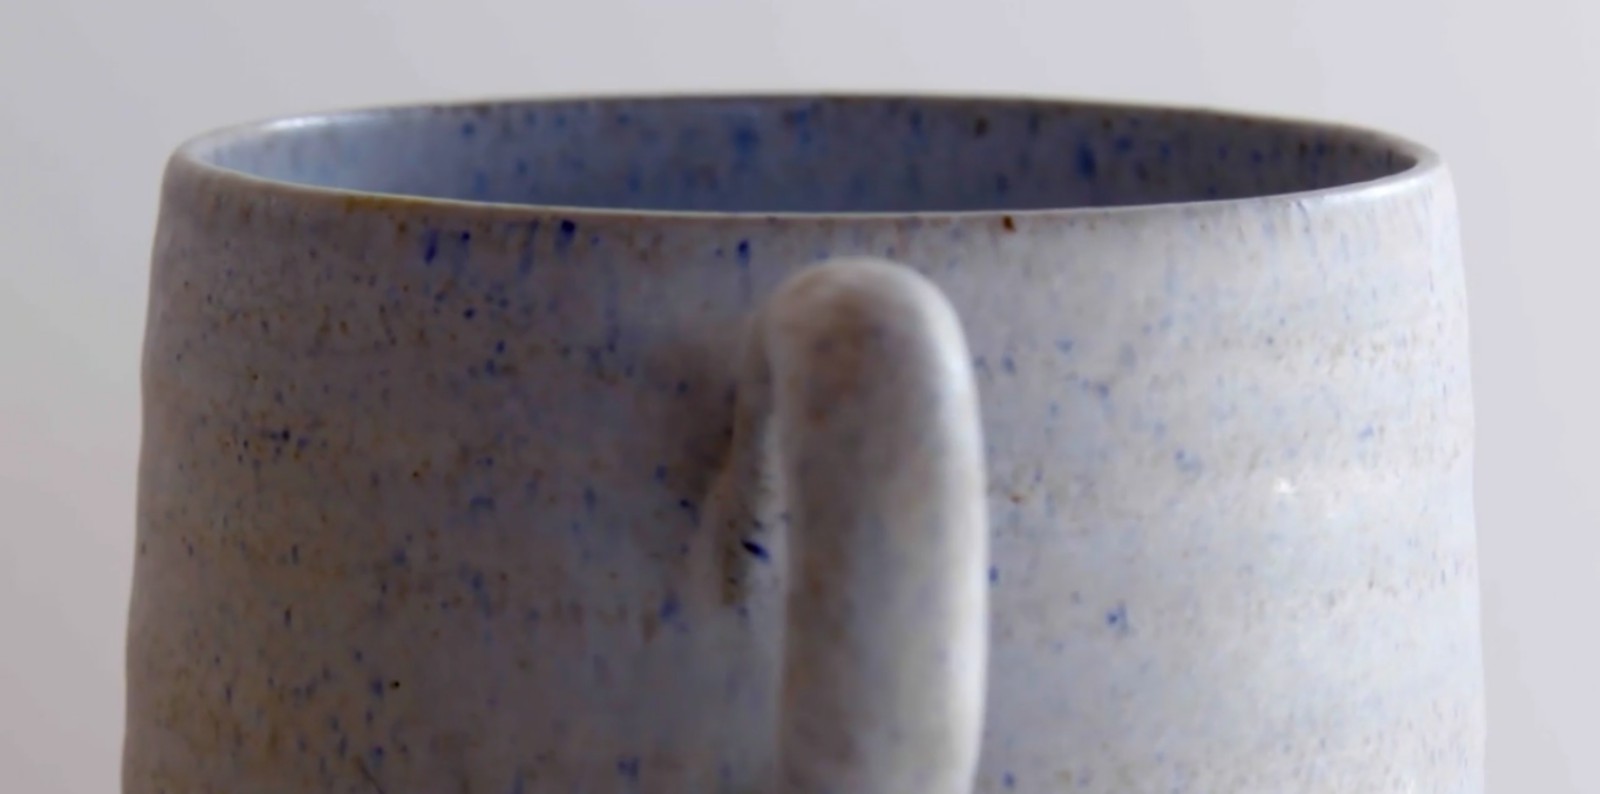 Artbound- Heath Ceramics: The Making Of A Classic Image